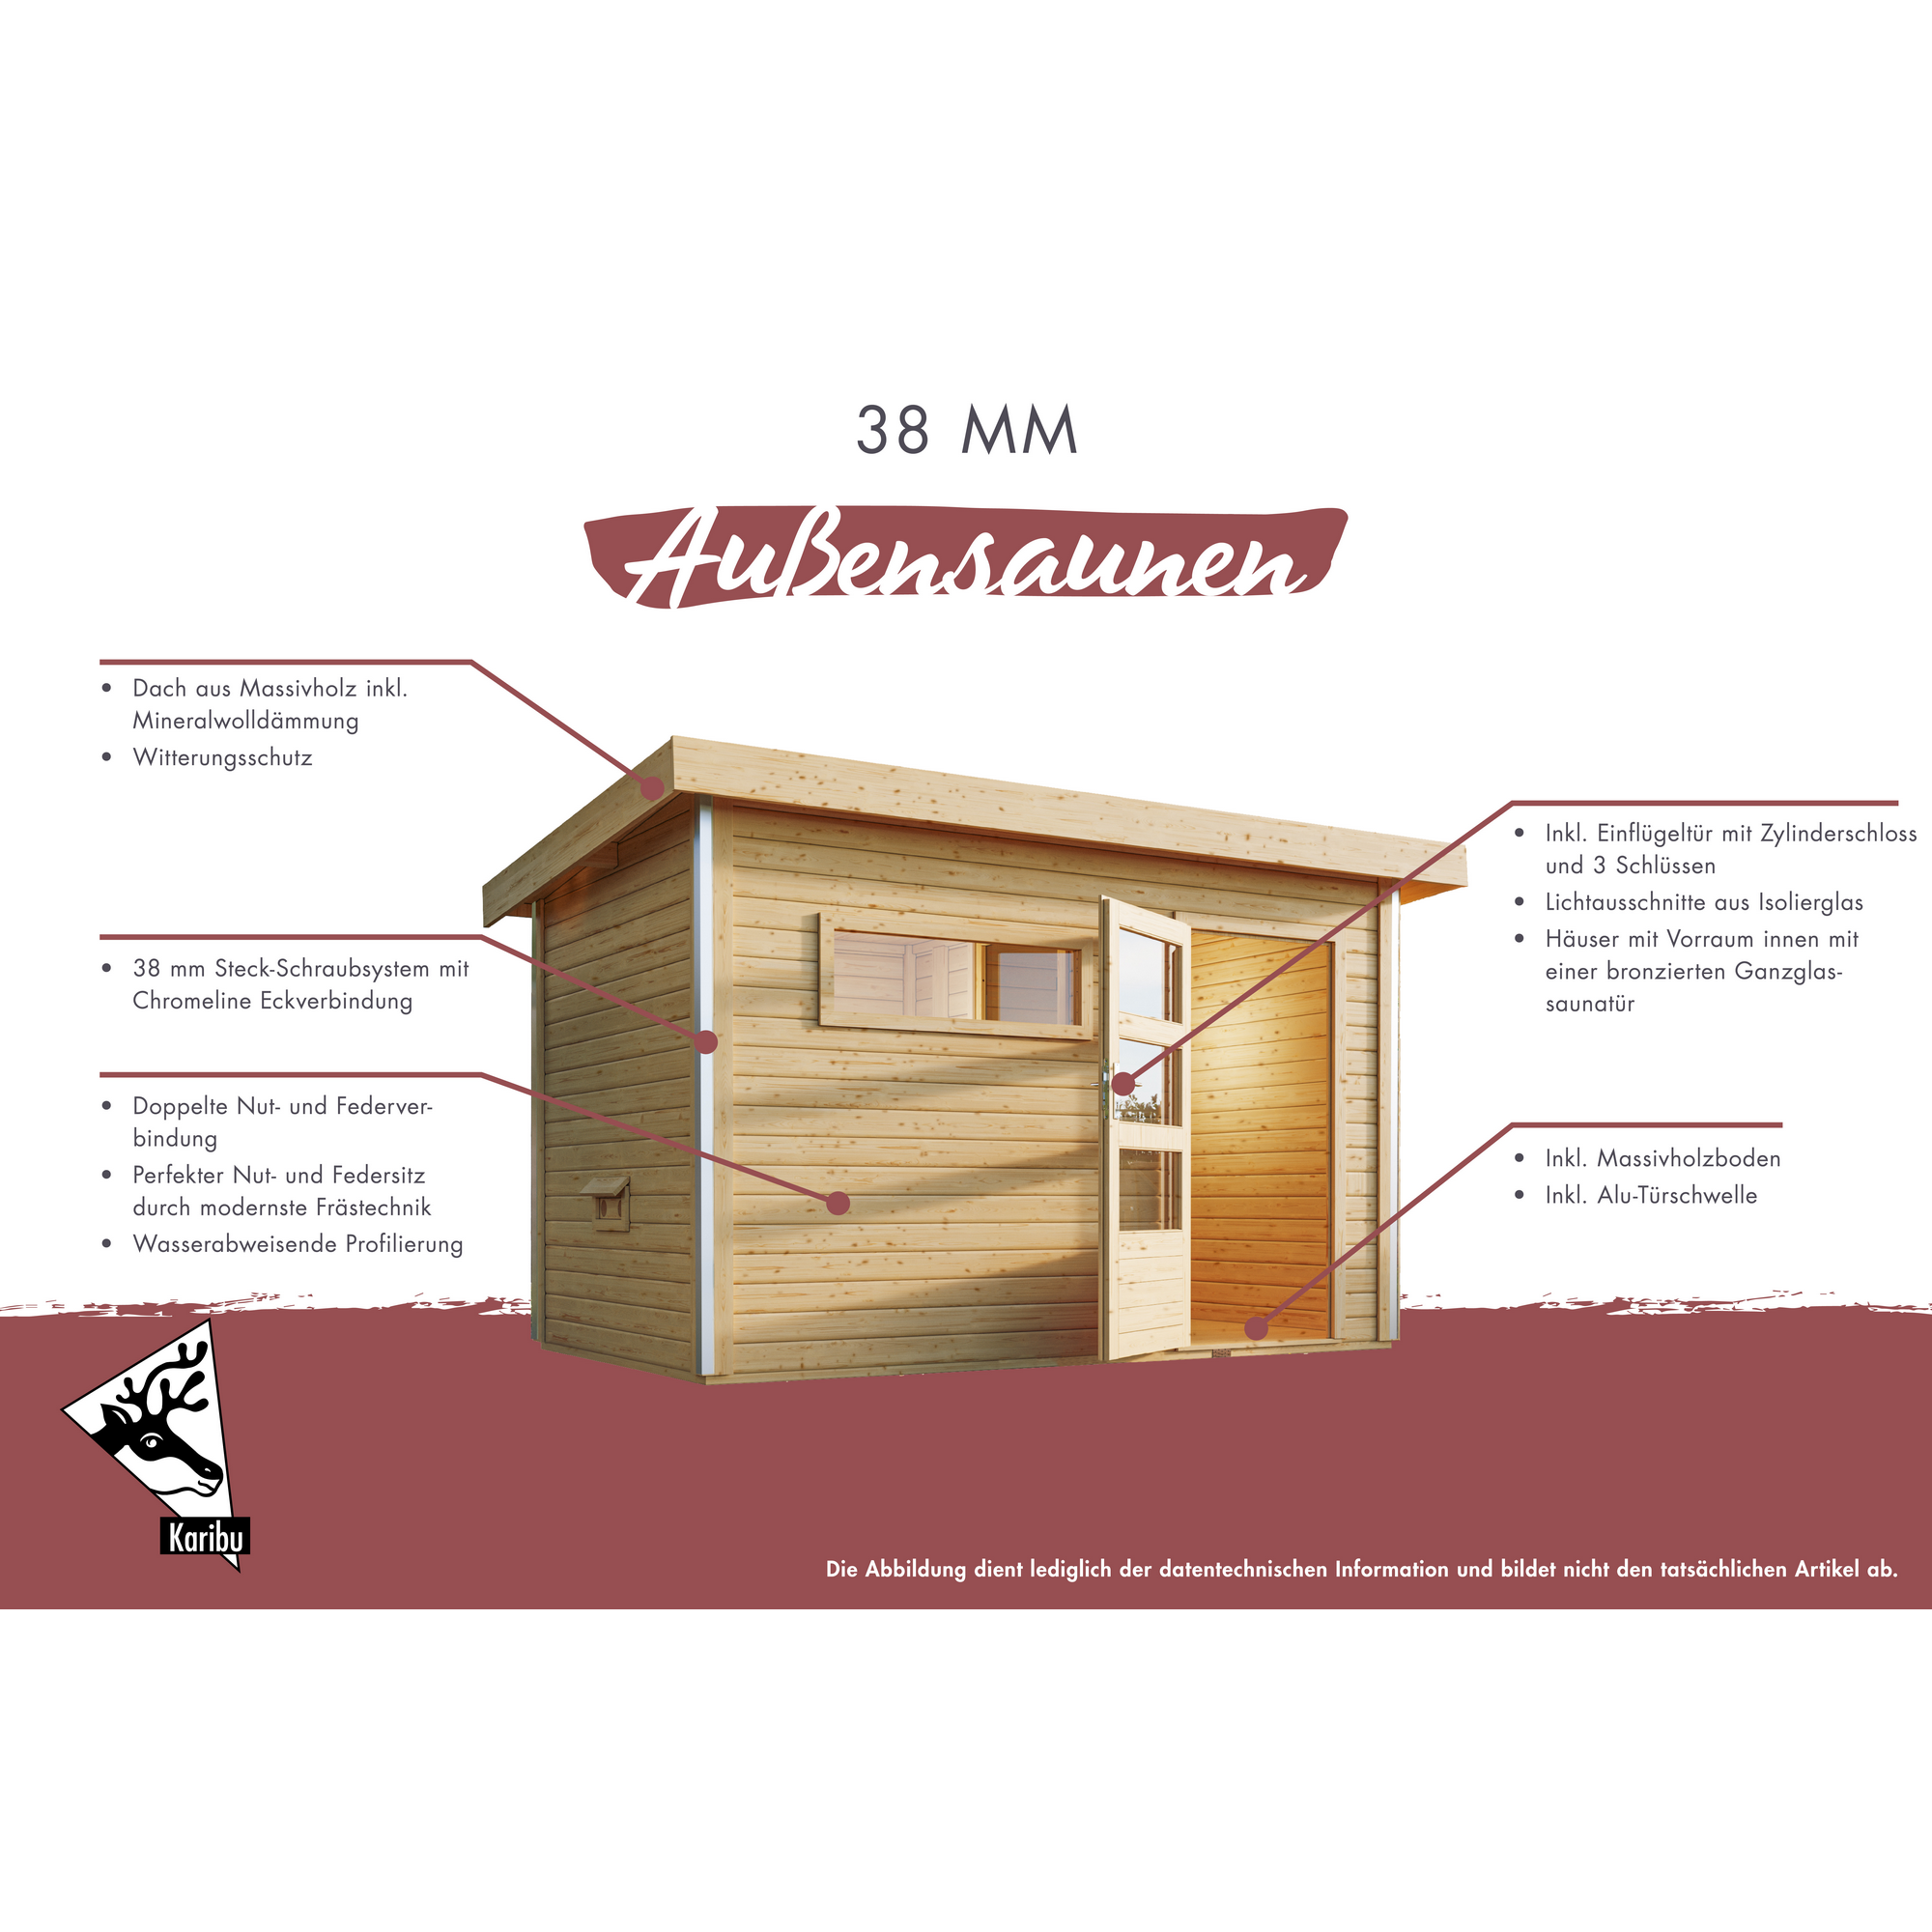 Gartenhaus mit Sauna 'Enrique 1 Variante A' anthrazit mit Holzofen 308 x 308 x 242 cm + product picture